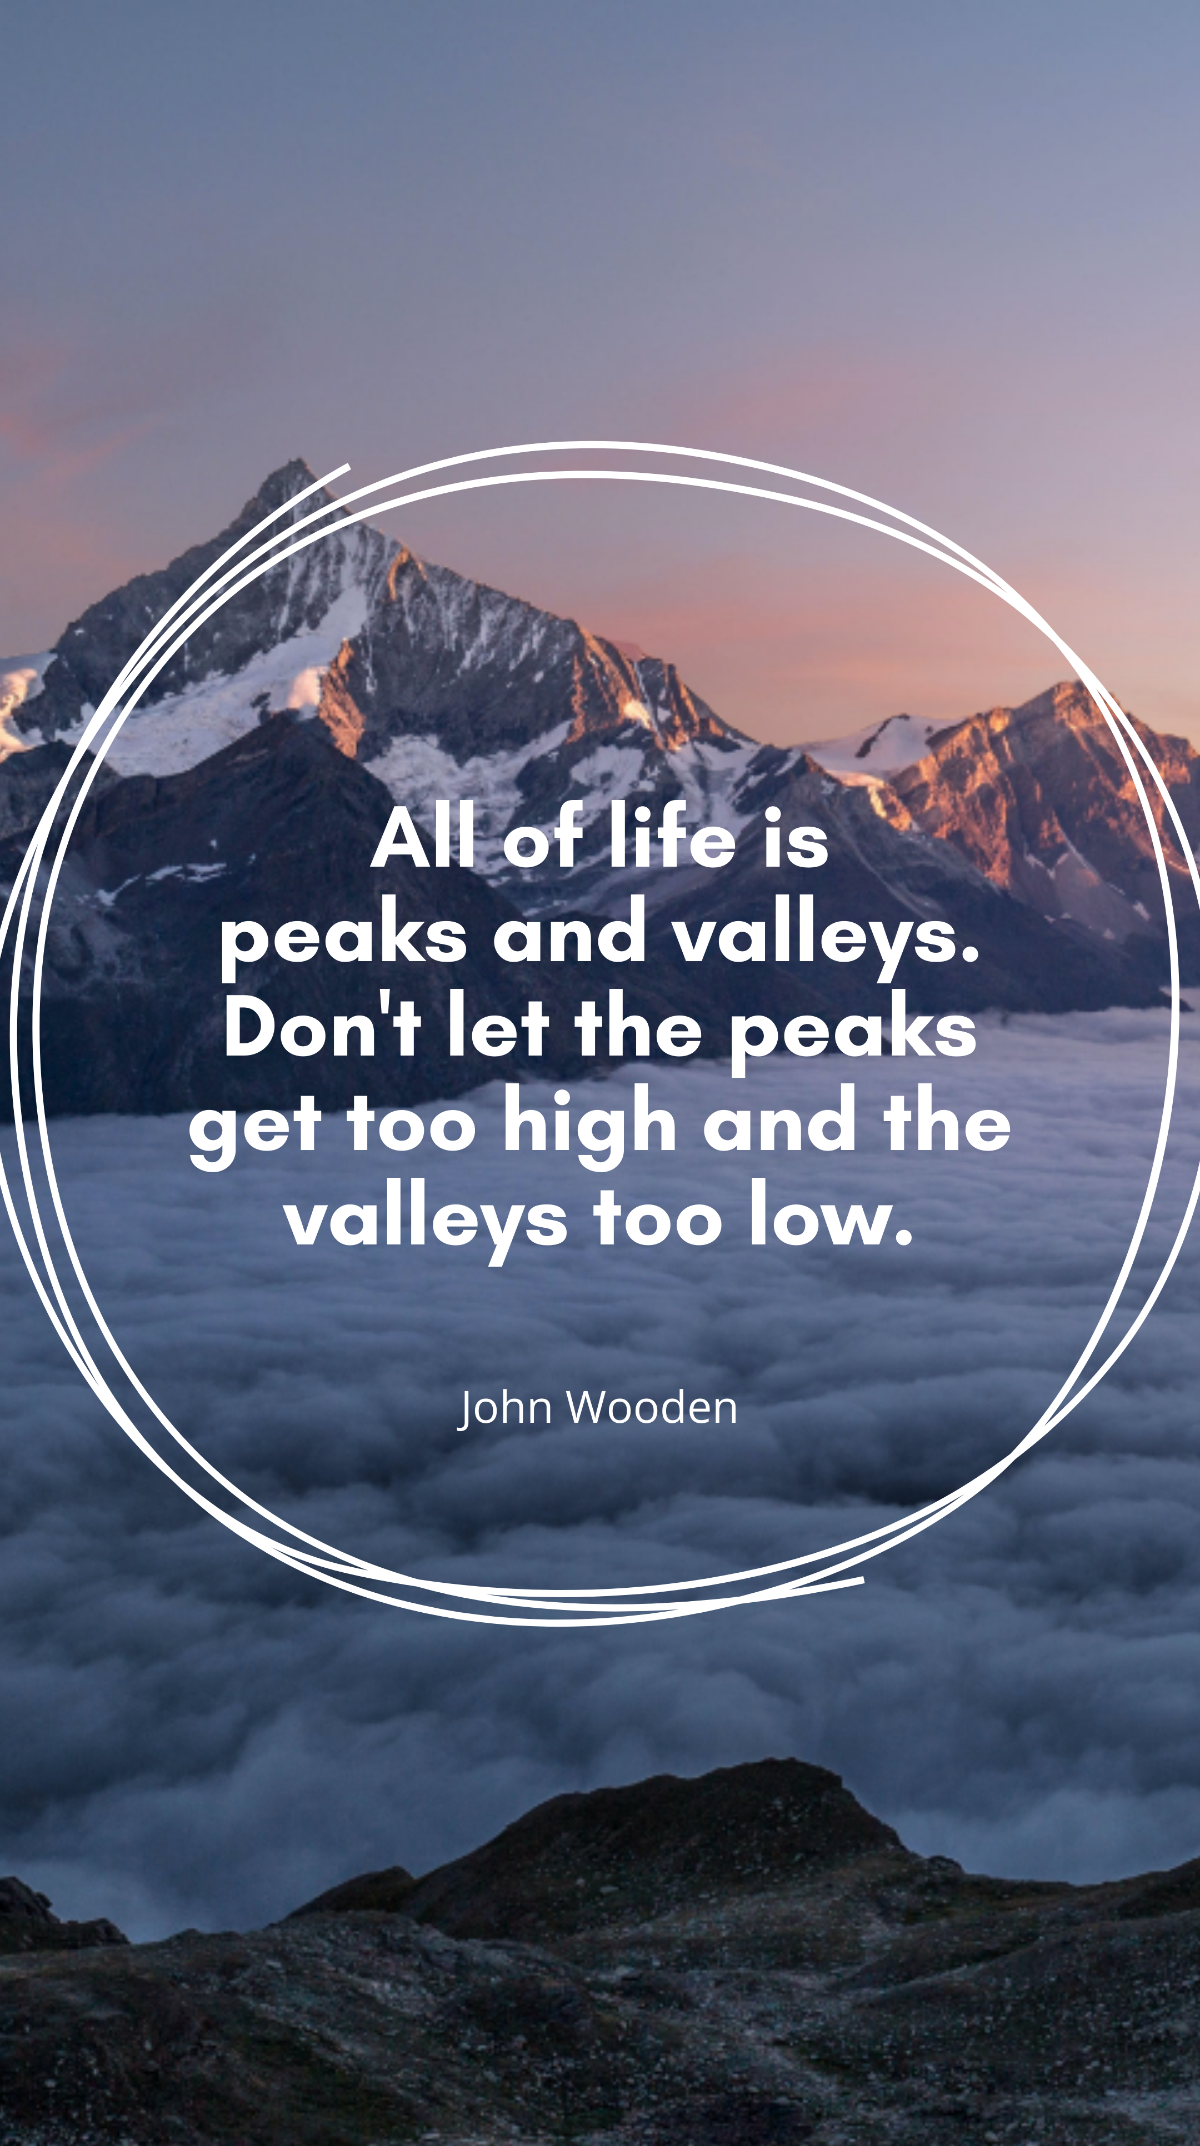 John Wooden - 